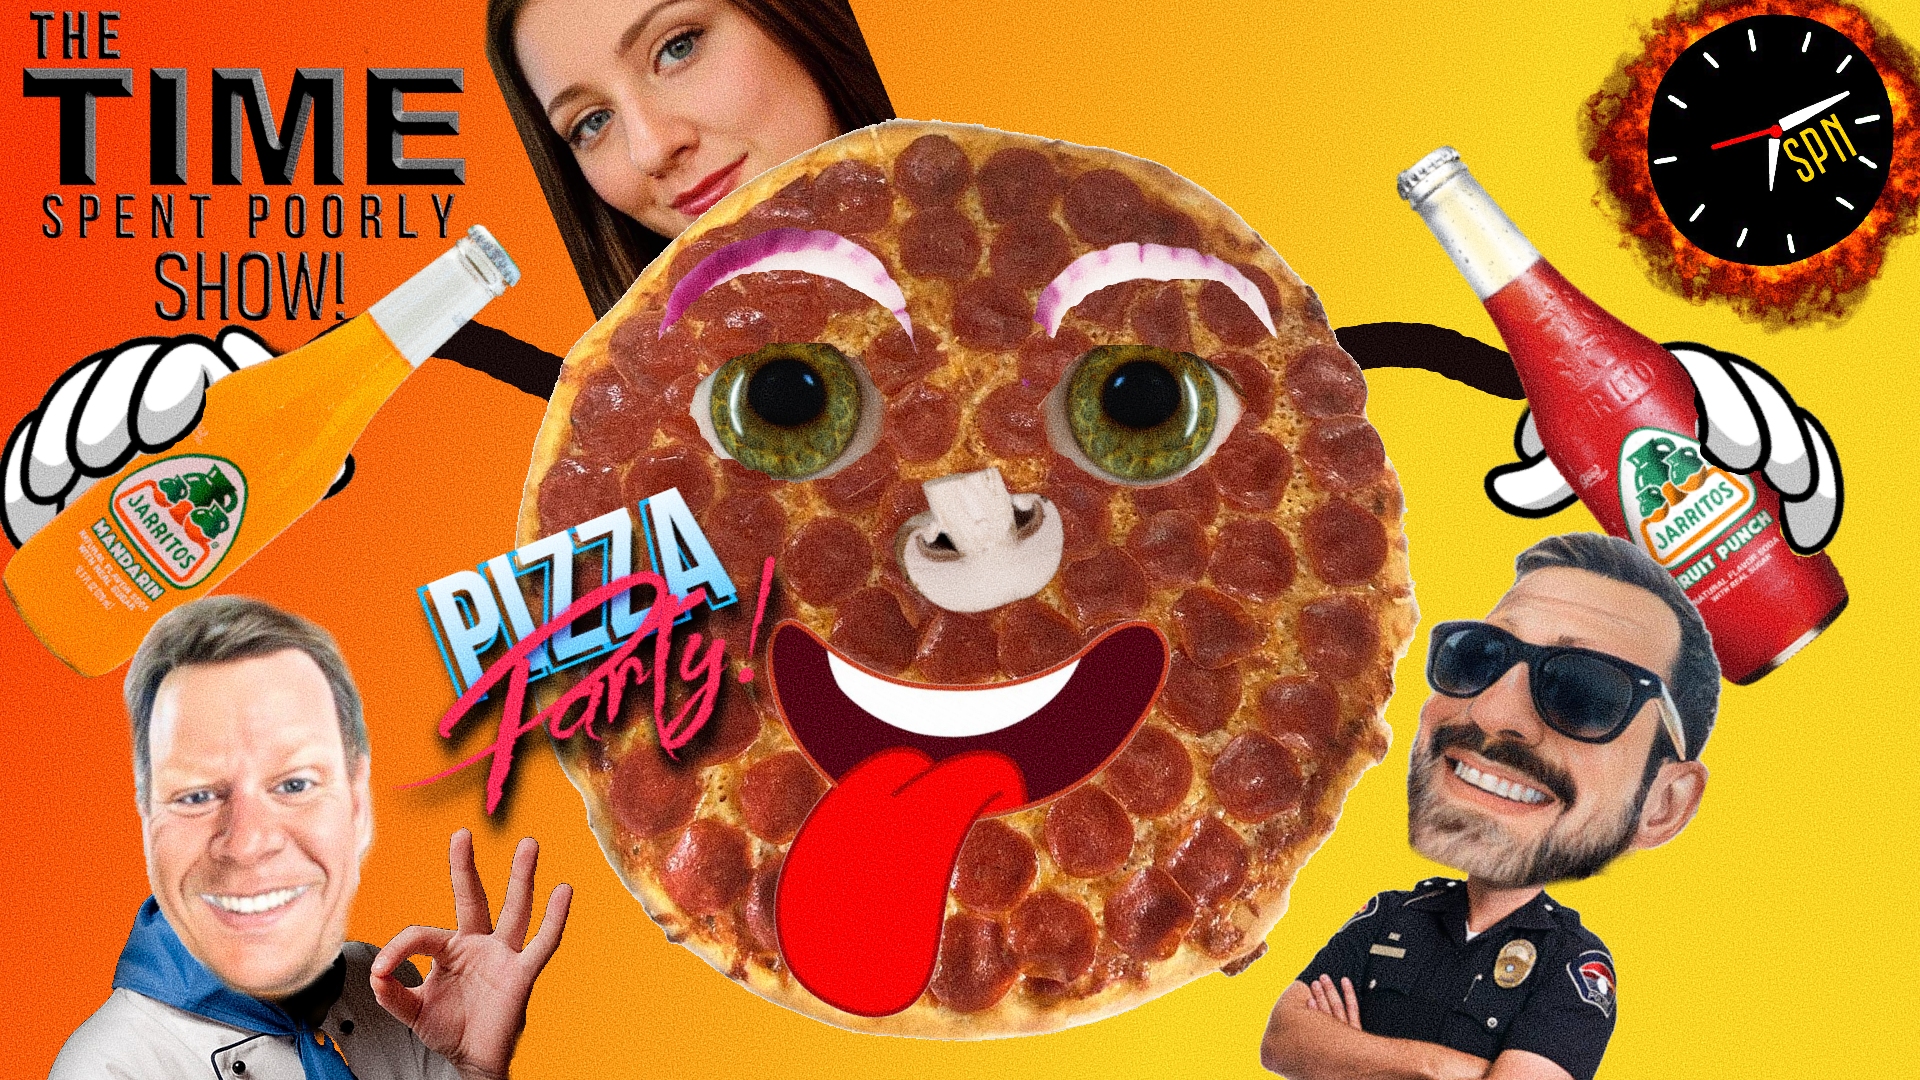 21 – Pizza Par Tay!!!!